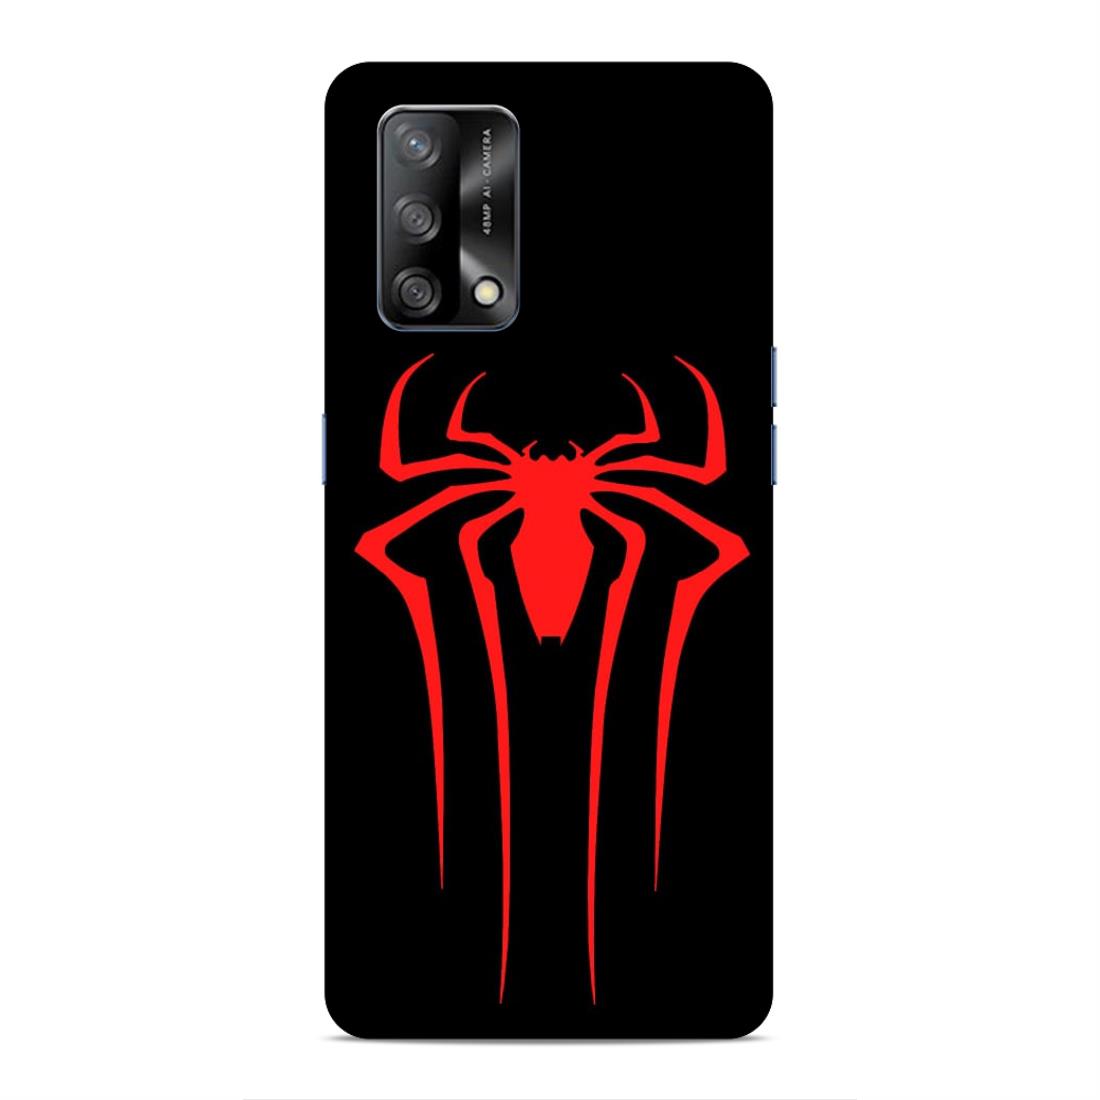 Spiderman Symbol Hard Back Case For Oppo F19 / F19s